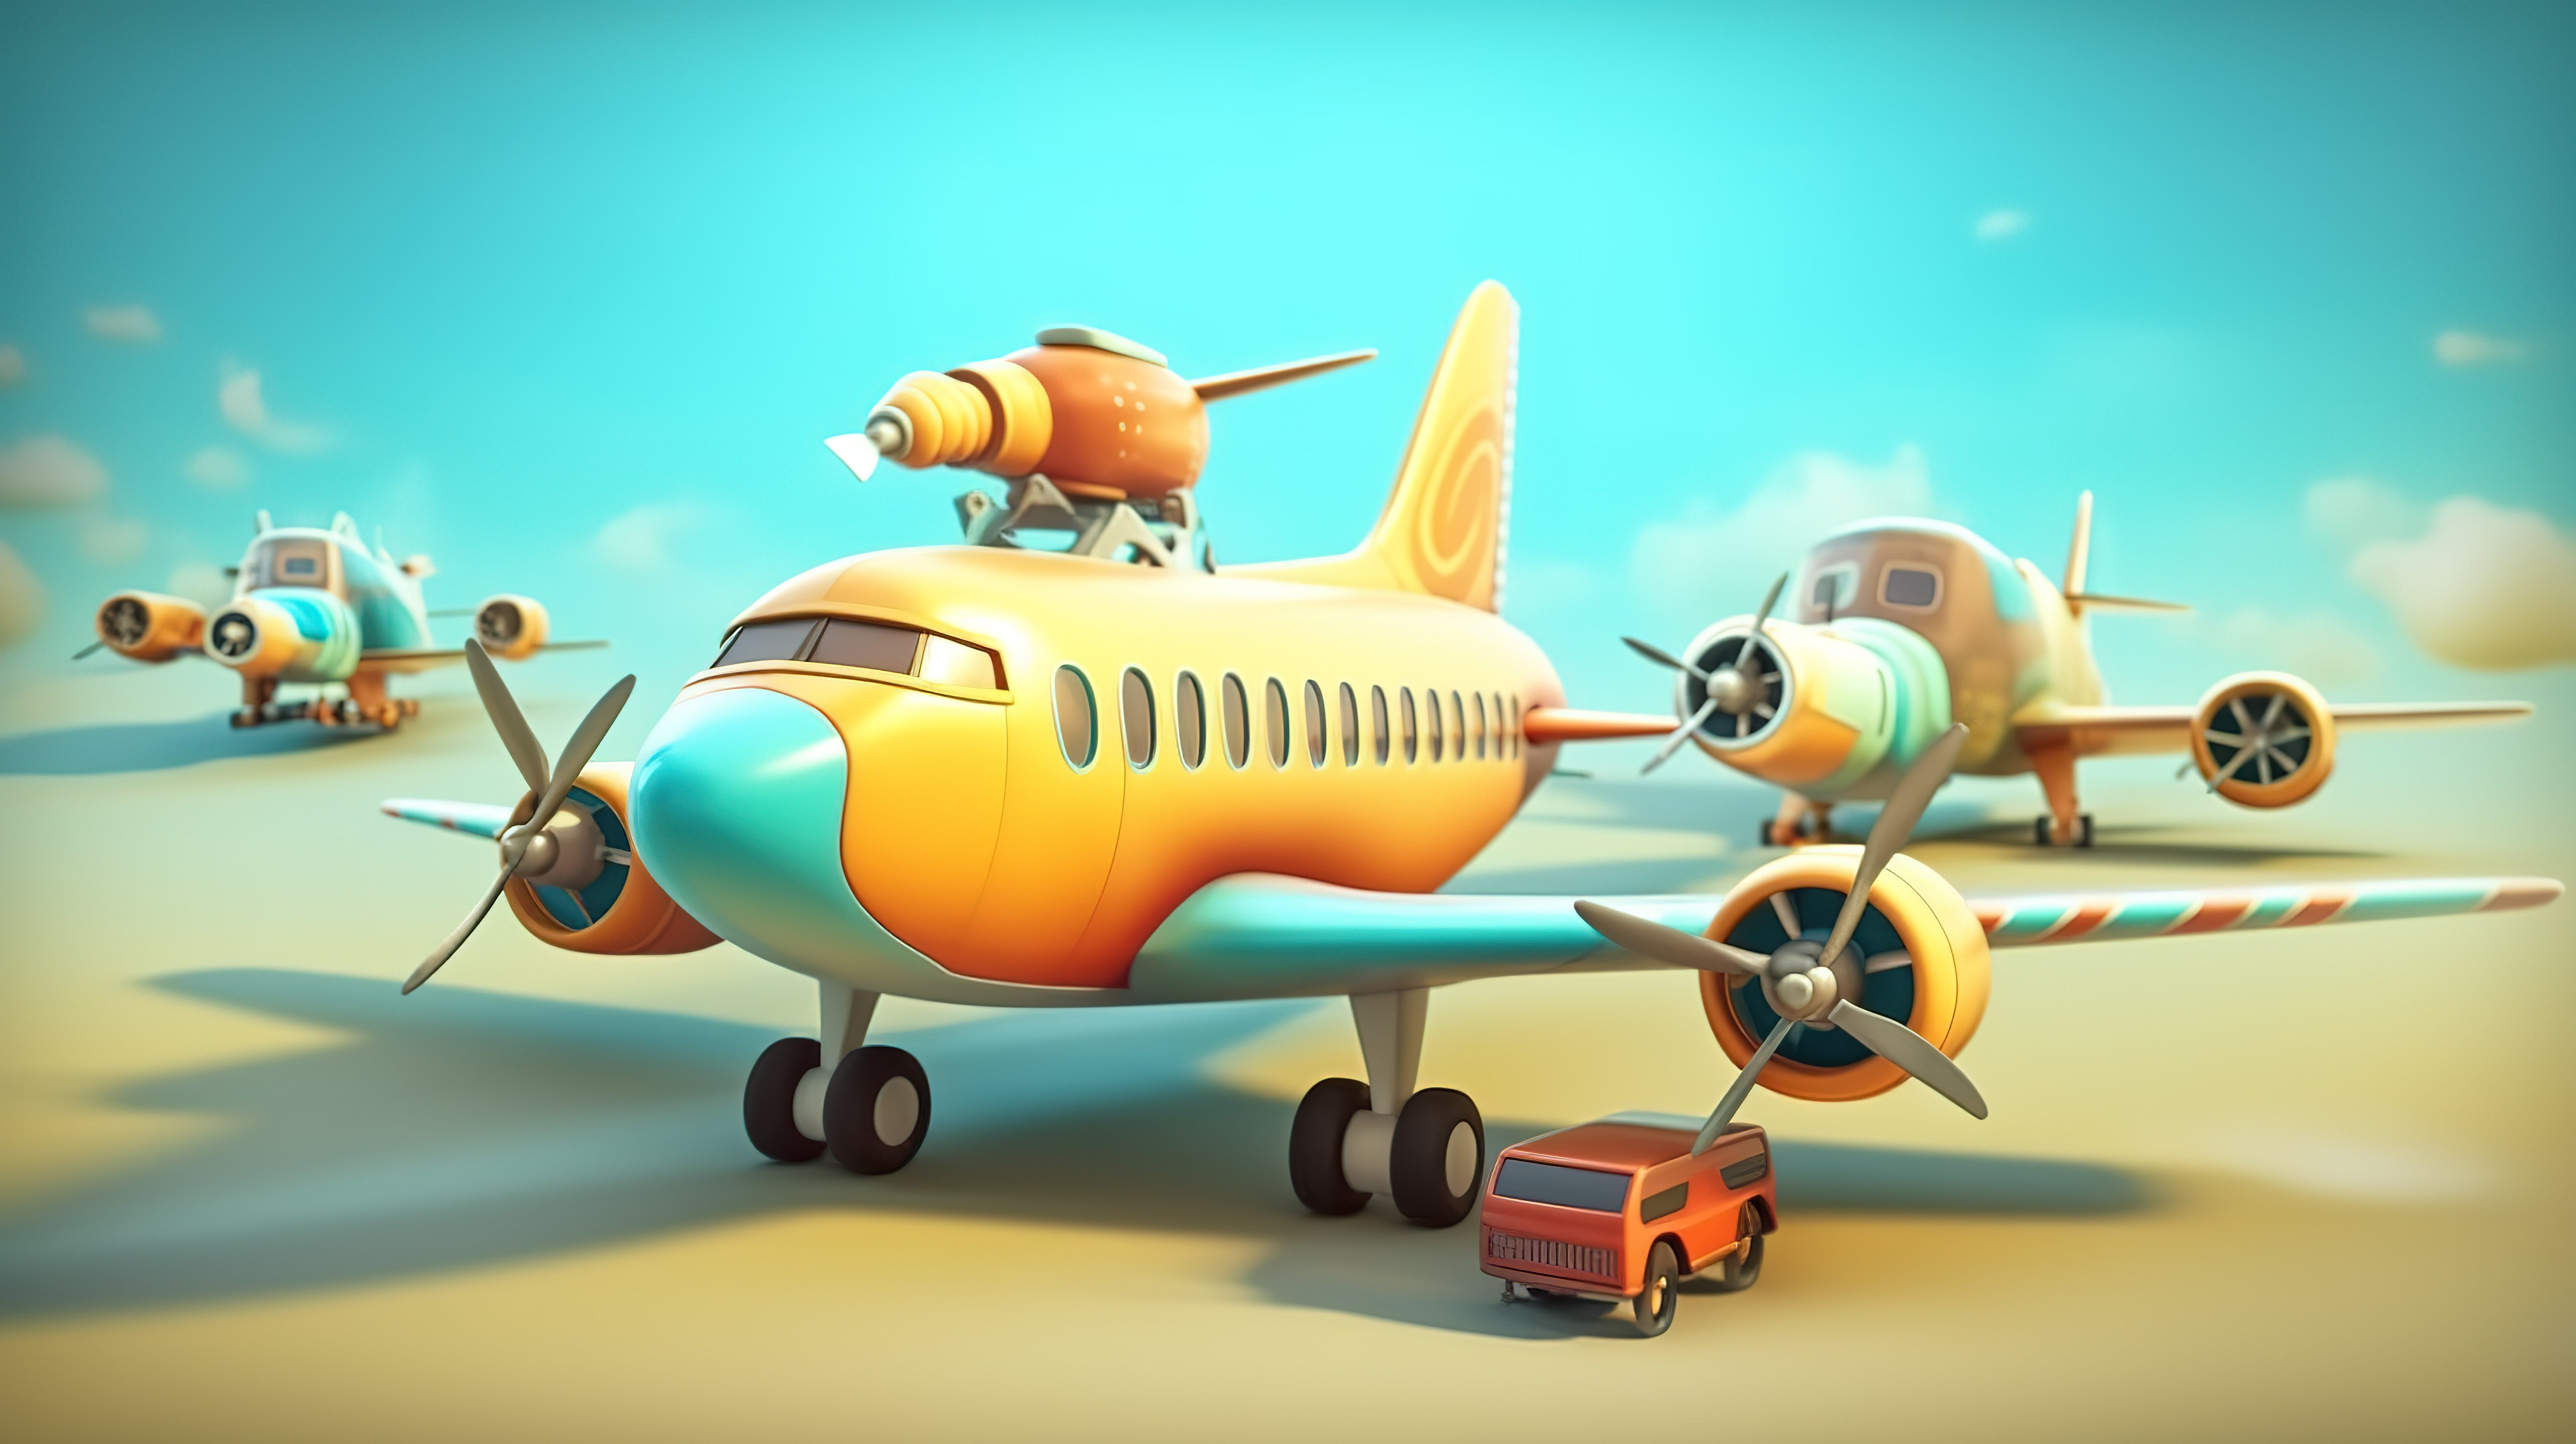 3D 渲染的飞机与卡通风格的旅行横幅图片